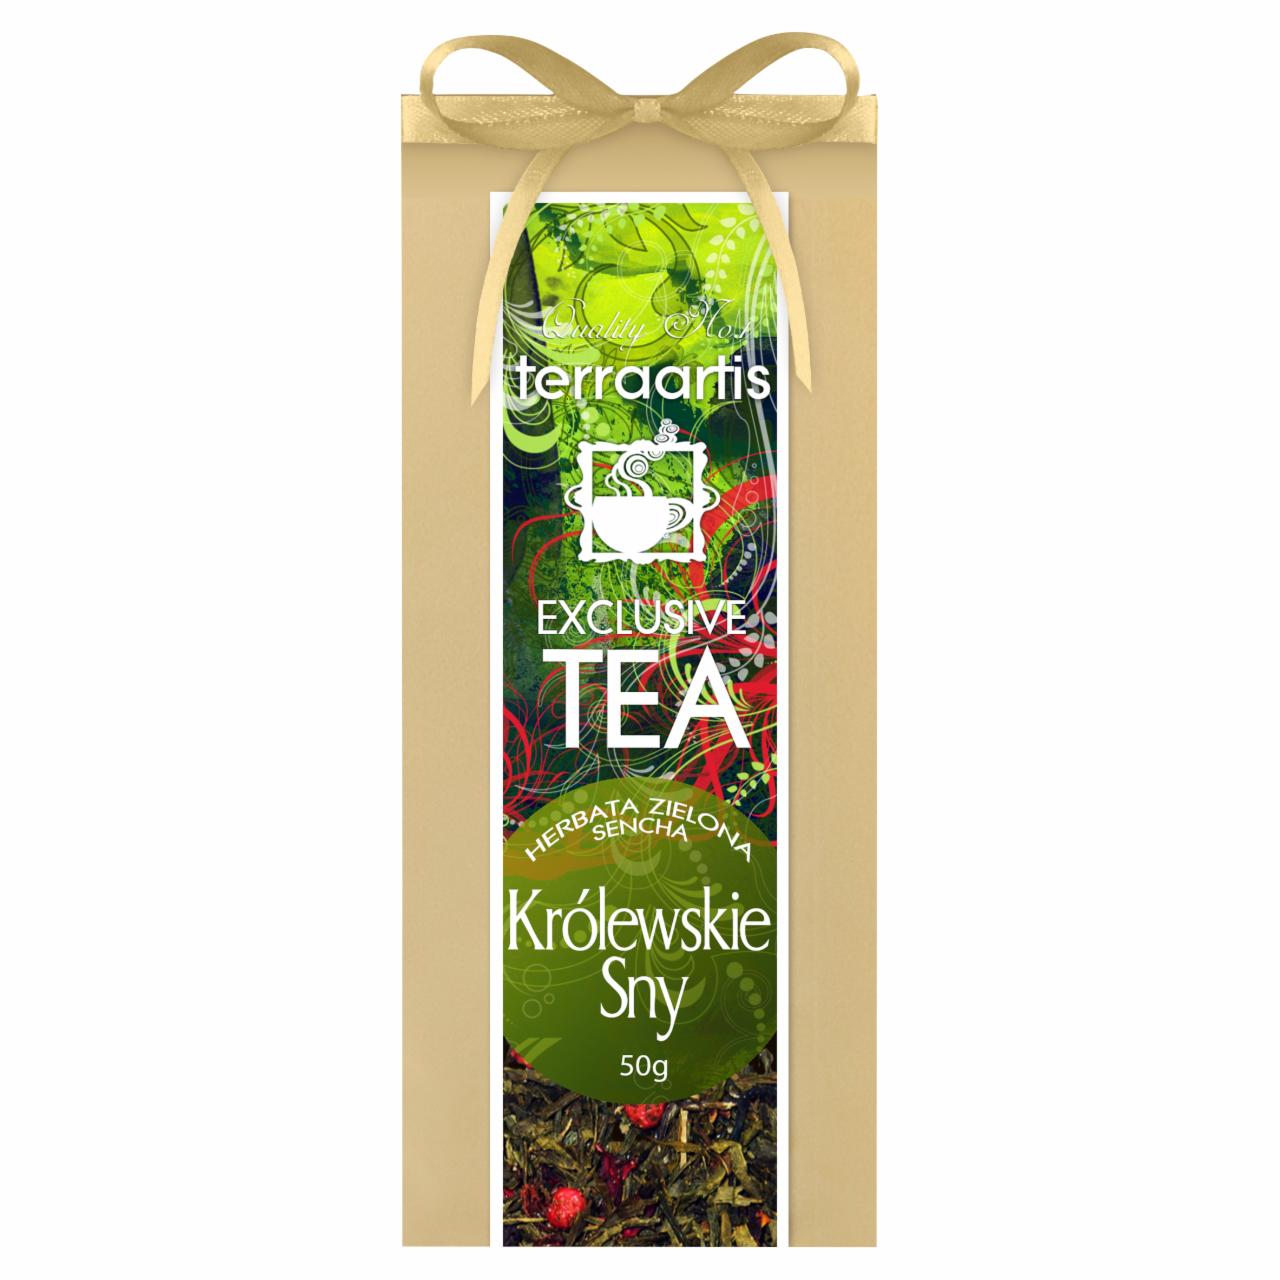 Zdjęcia - Terraartis Exclusive Tea Herbata zielona Sencha królewskie sny 50 g